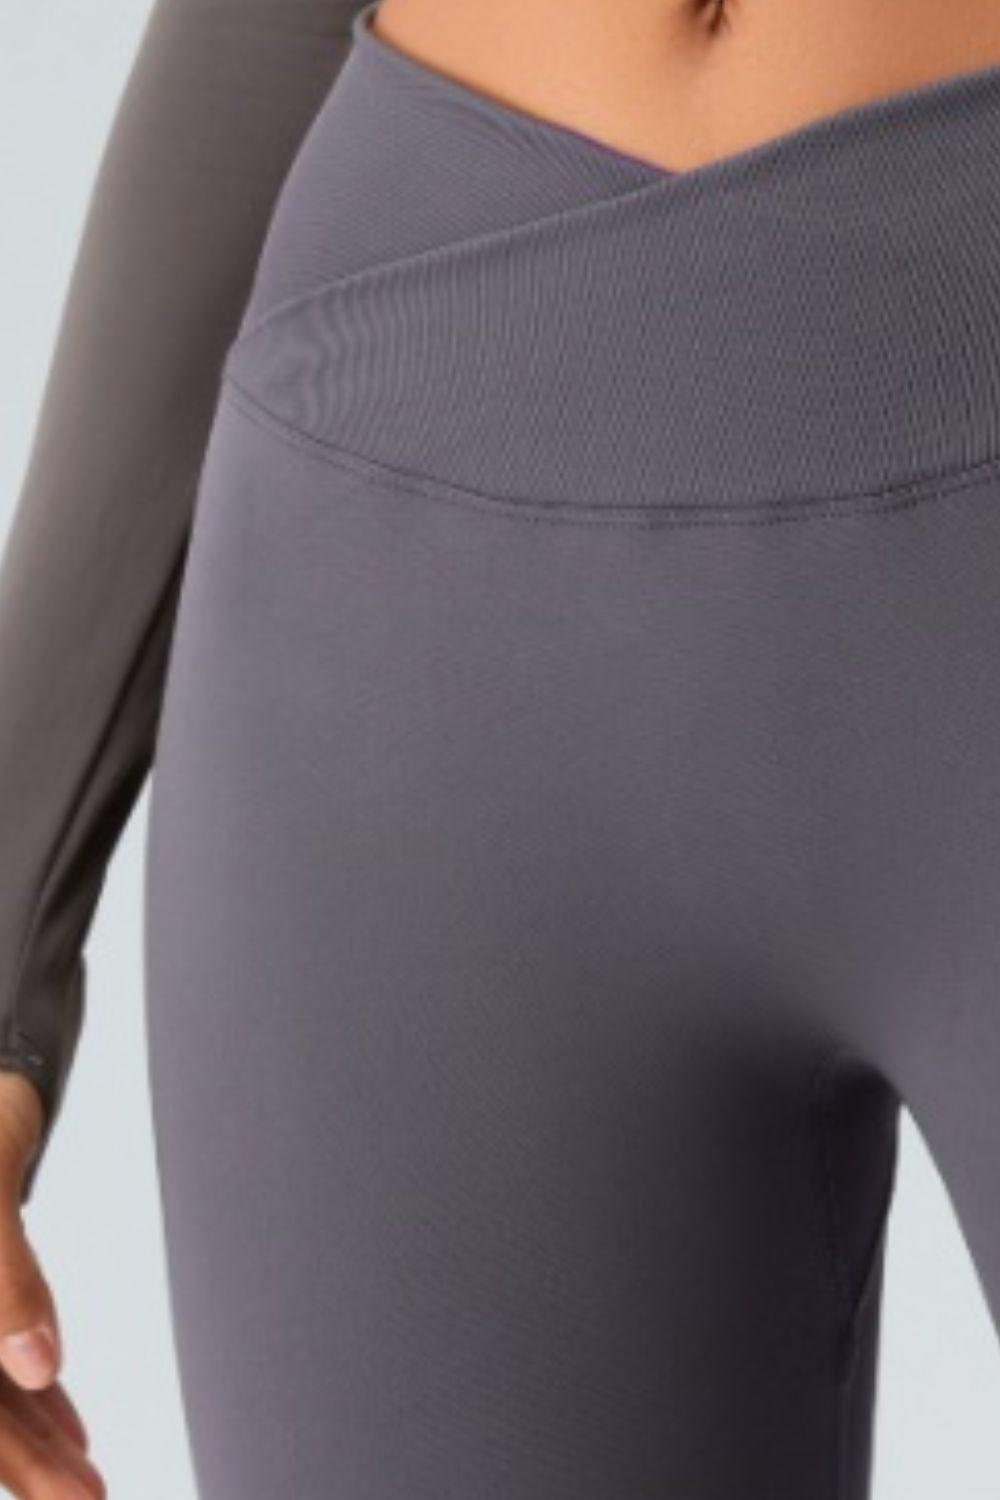 a close up of a woman's butt showing her butt